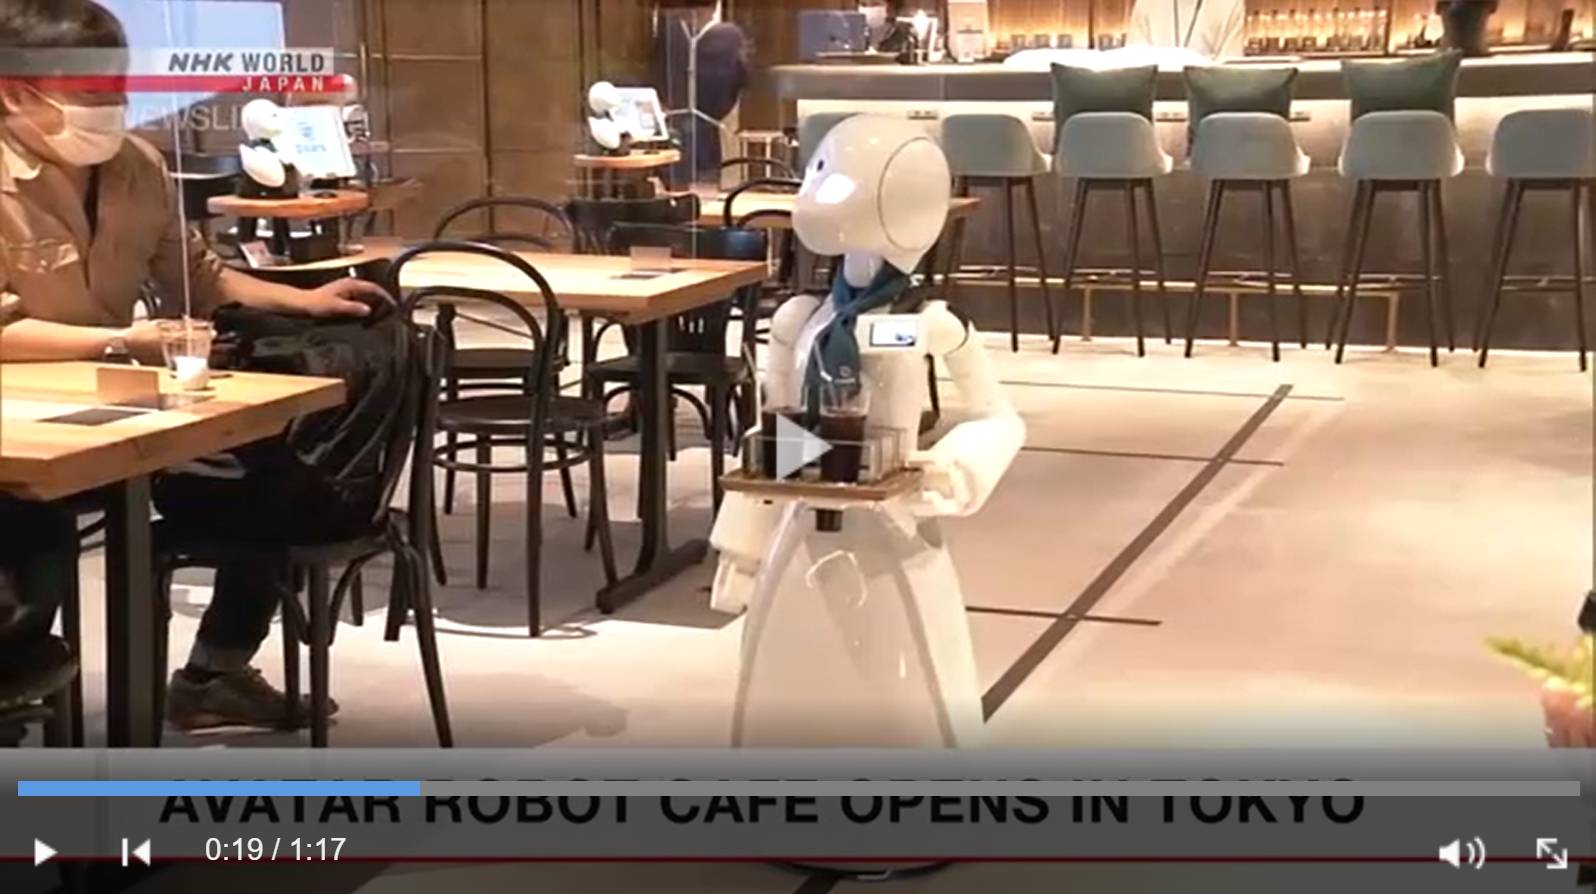 Цитата из видео «Avatar robot cafe opens in Tokyo» телеканала NHK